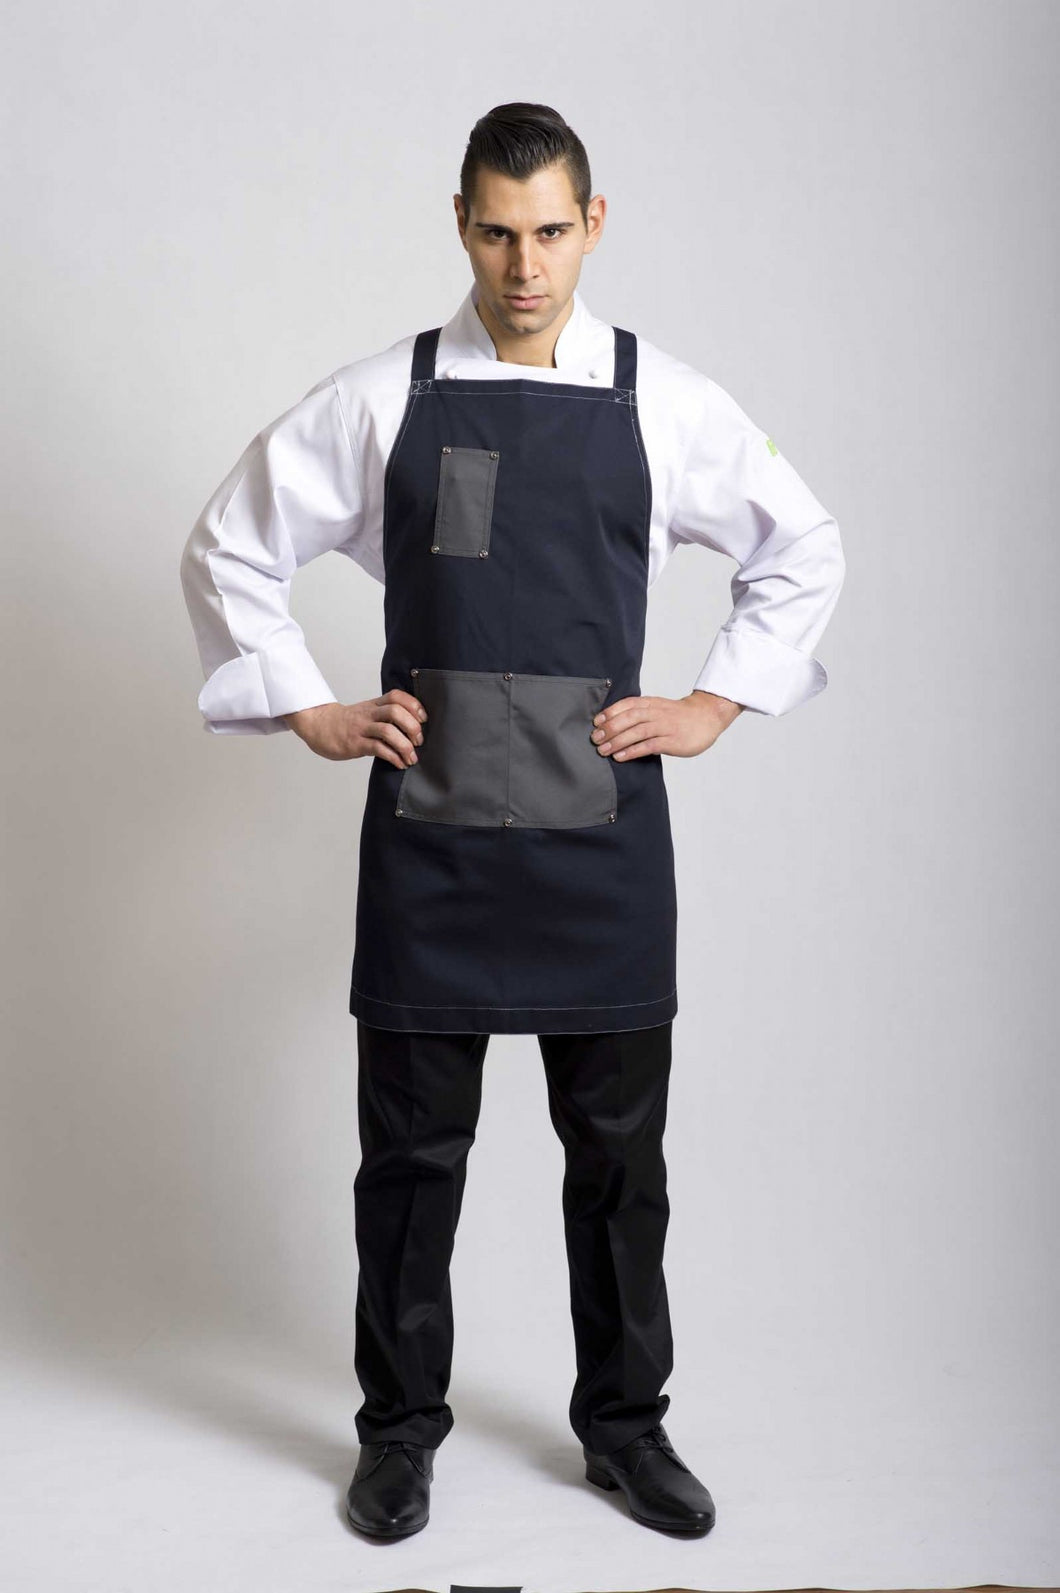 X-BACK Bib (Navy/Grey) - Global Chef 